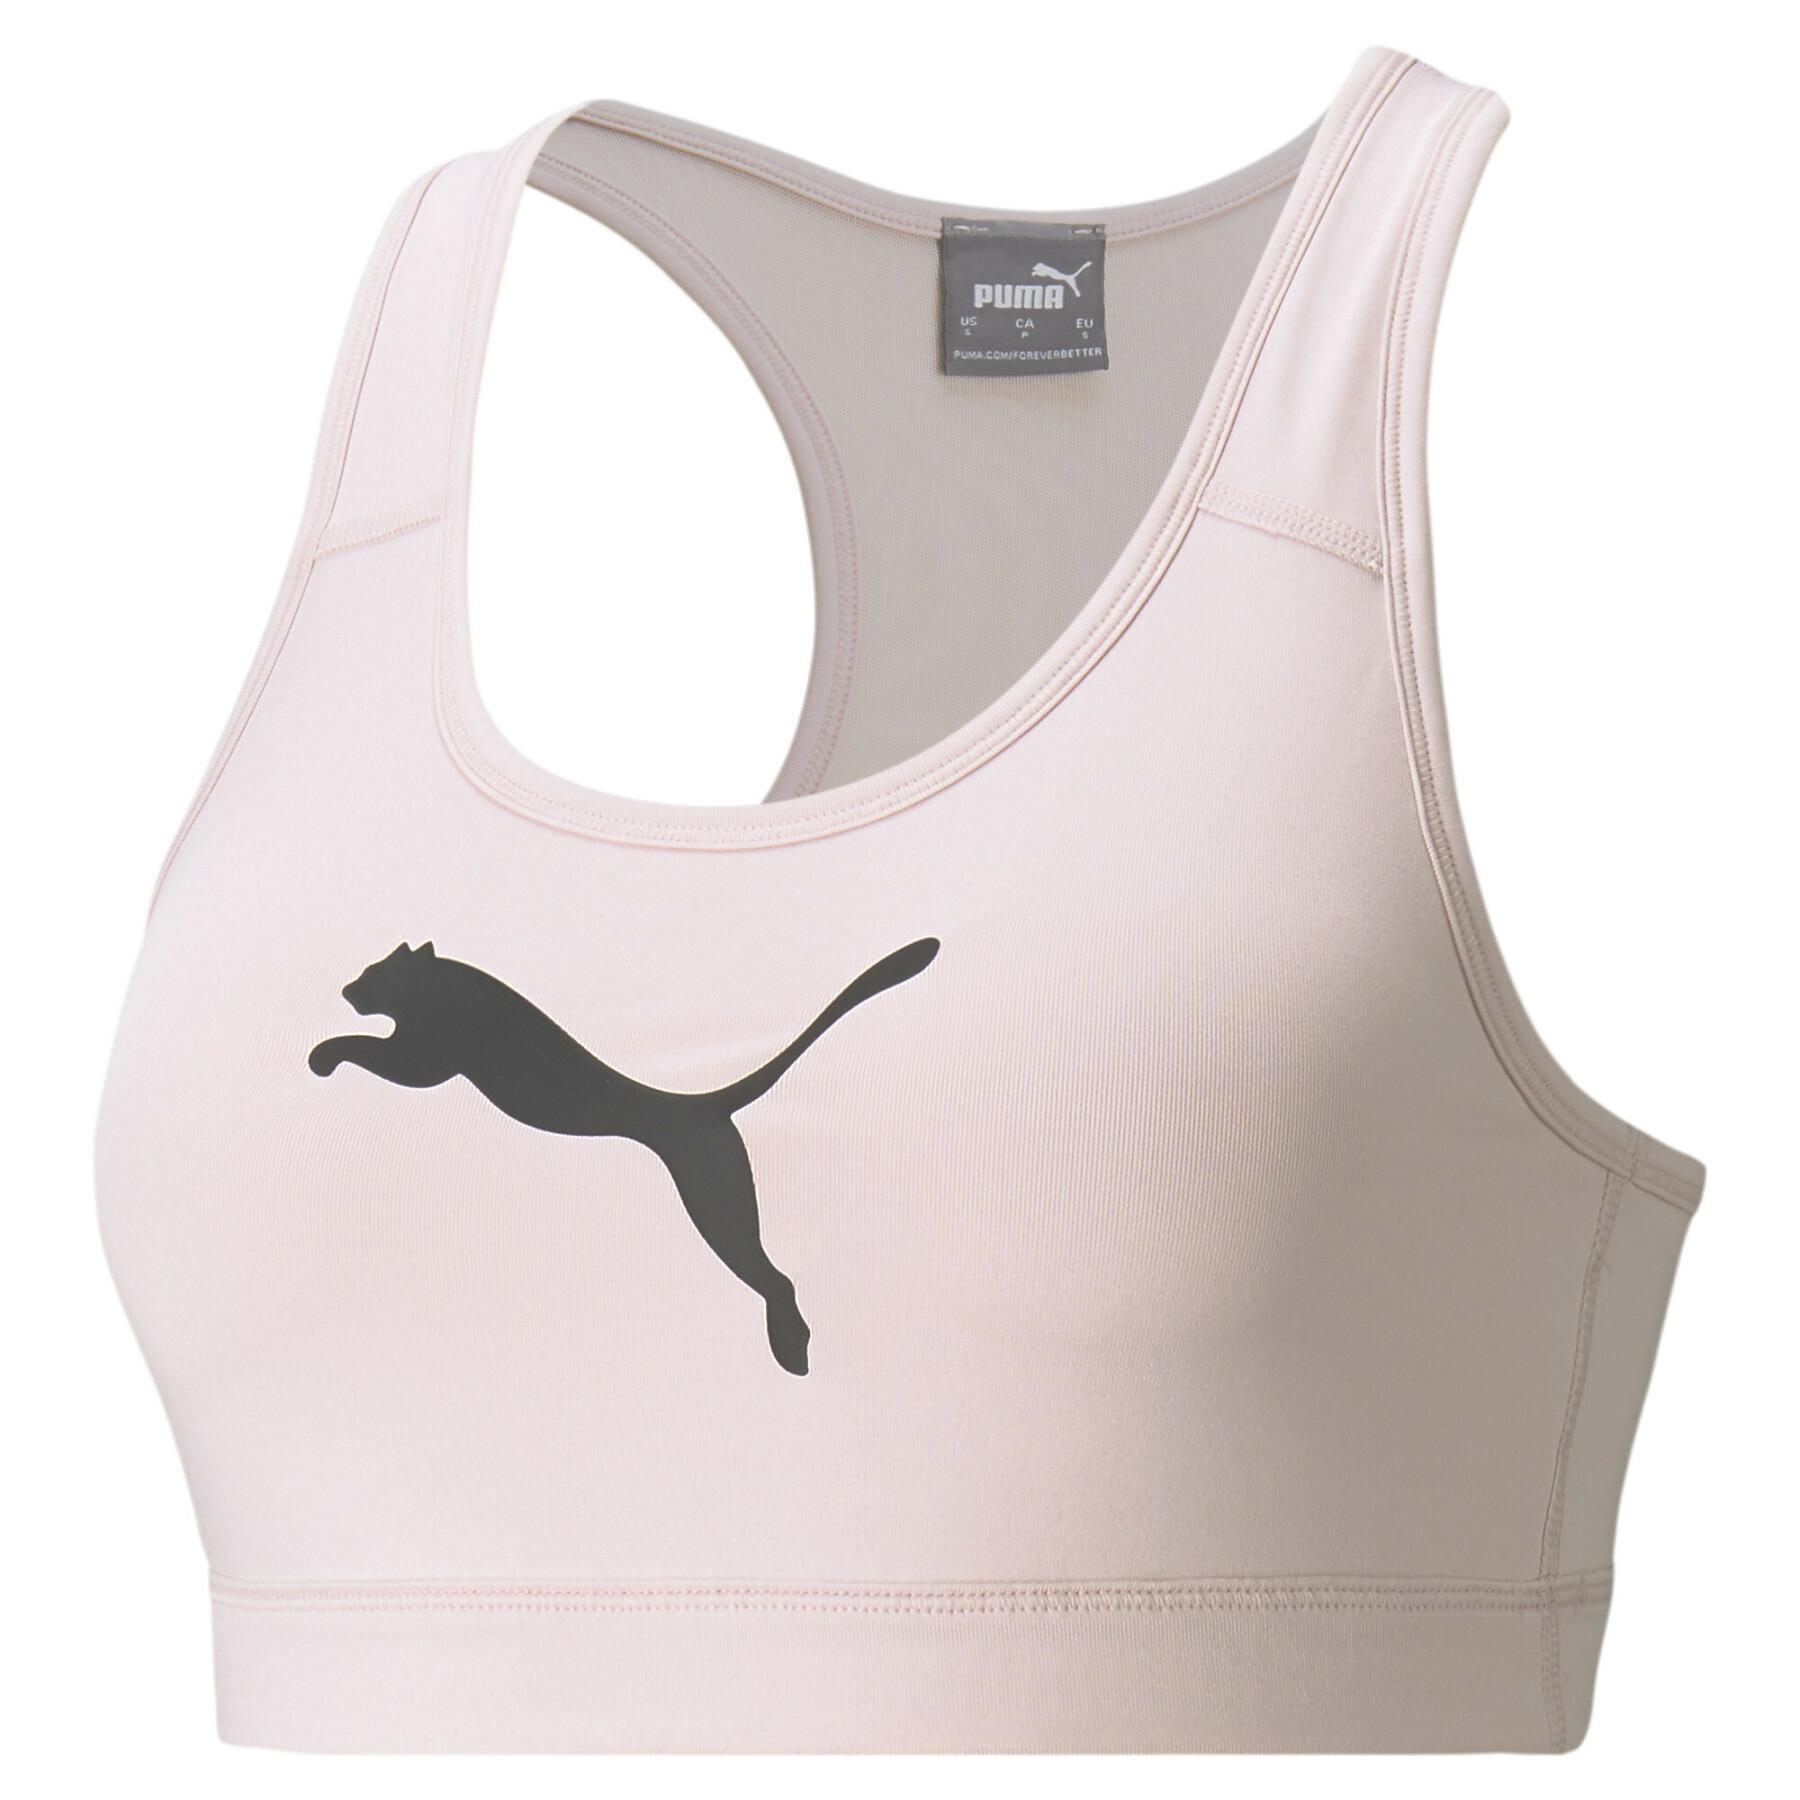 Puma sports bra large, Clothing and Apparel